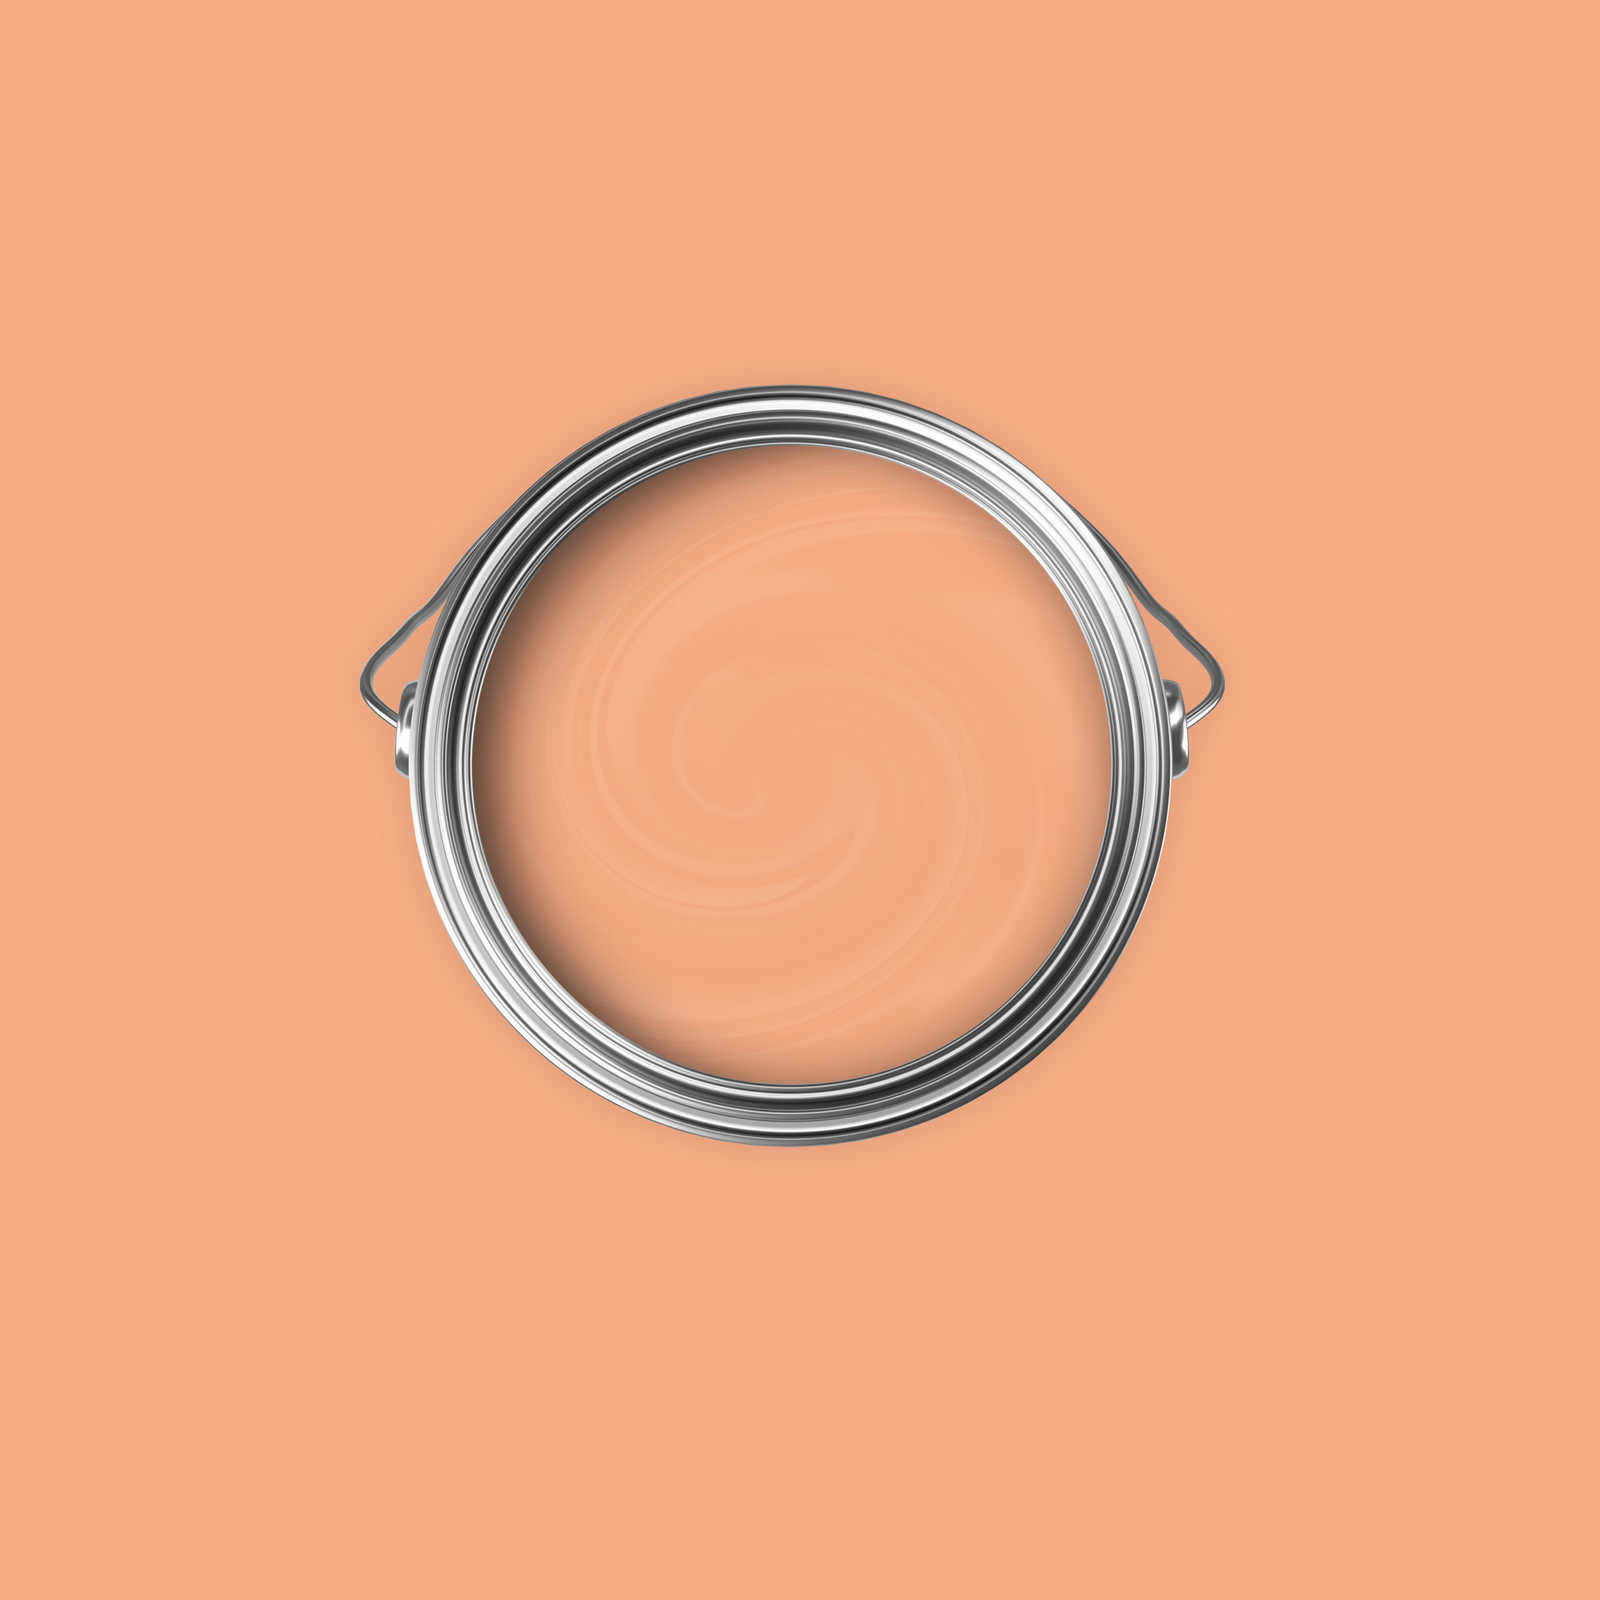             Premium Wall Paint Friendly Salmon »Active Apricot« NW913 – 2.5 litre
        